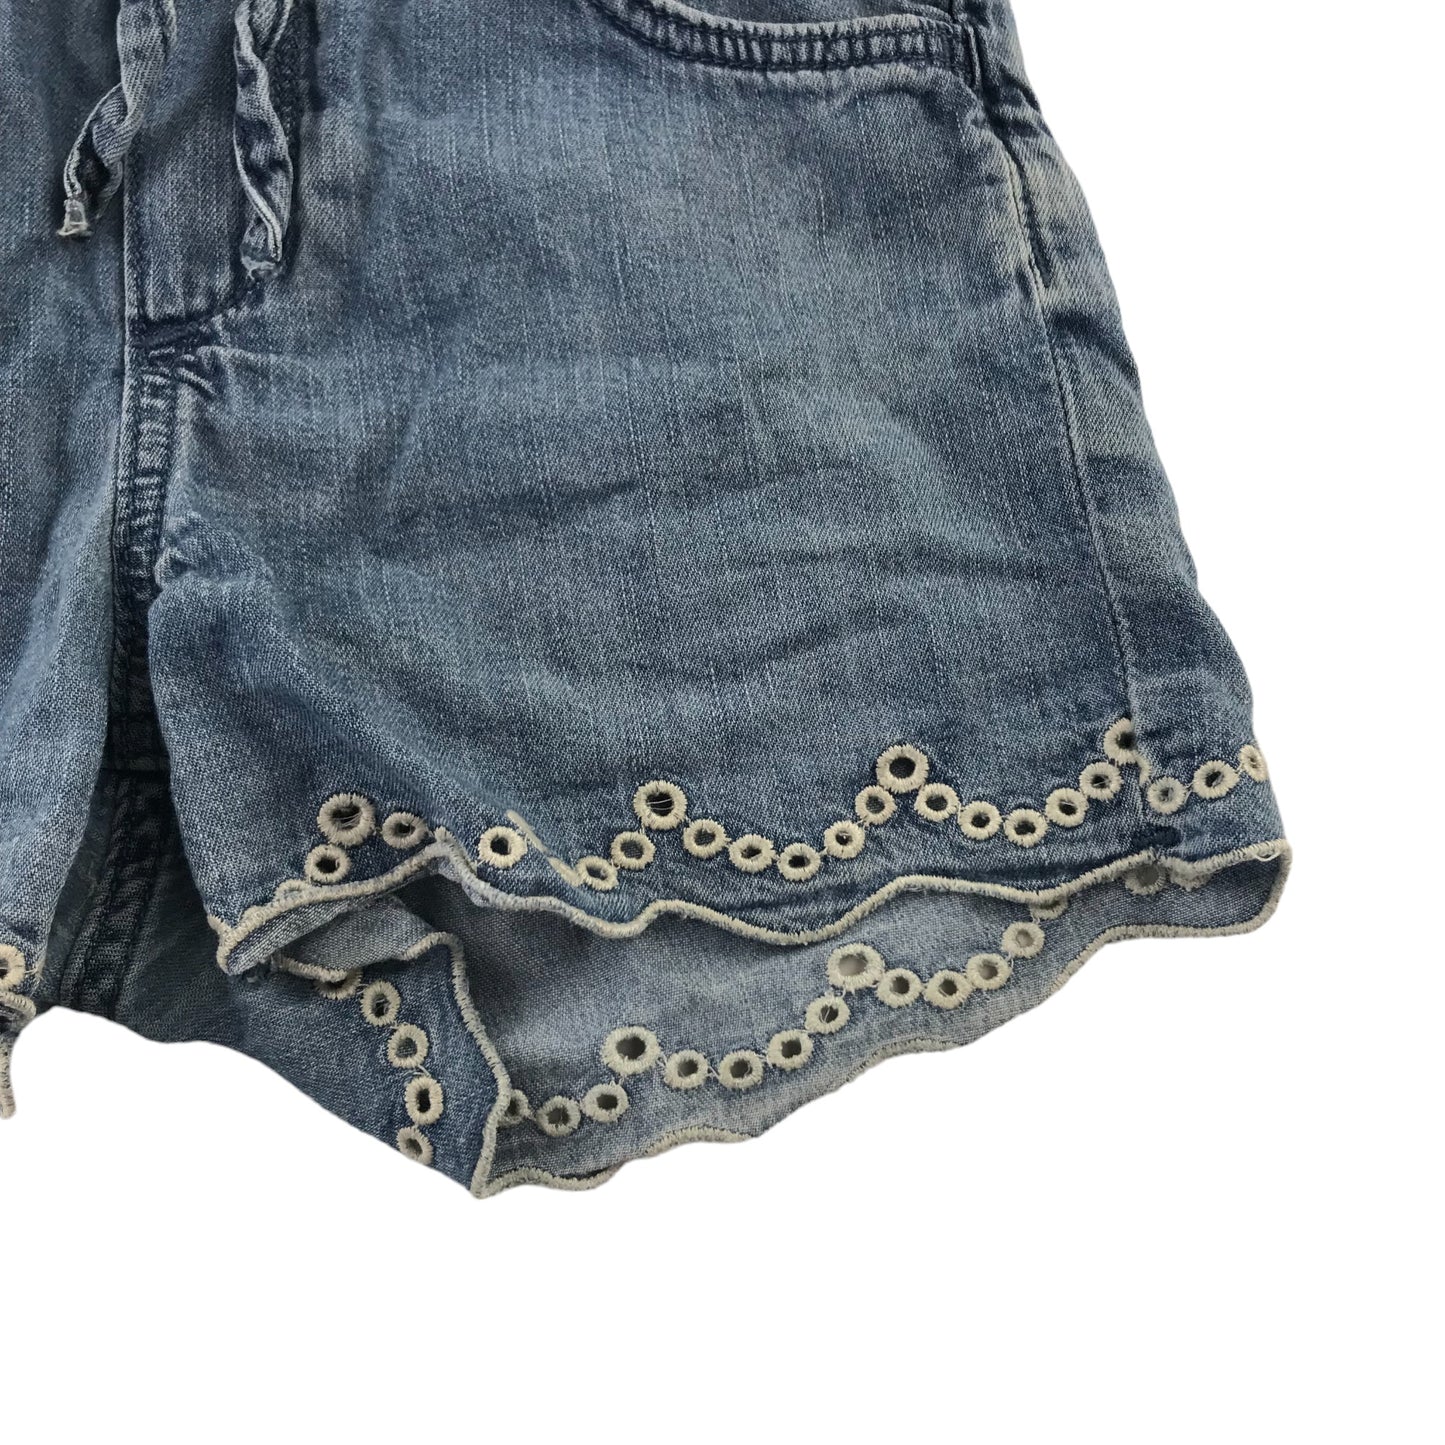 Primark shorts 6-7 years blue denim embroidered patterned hem cotton